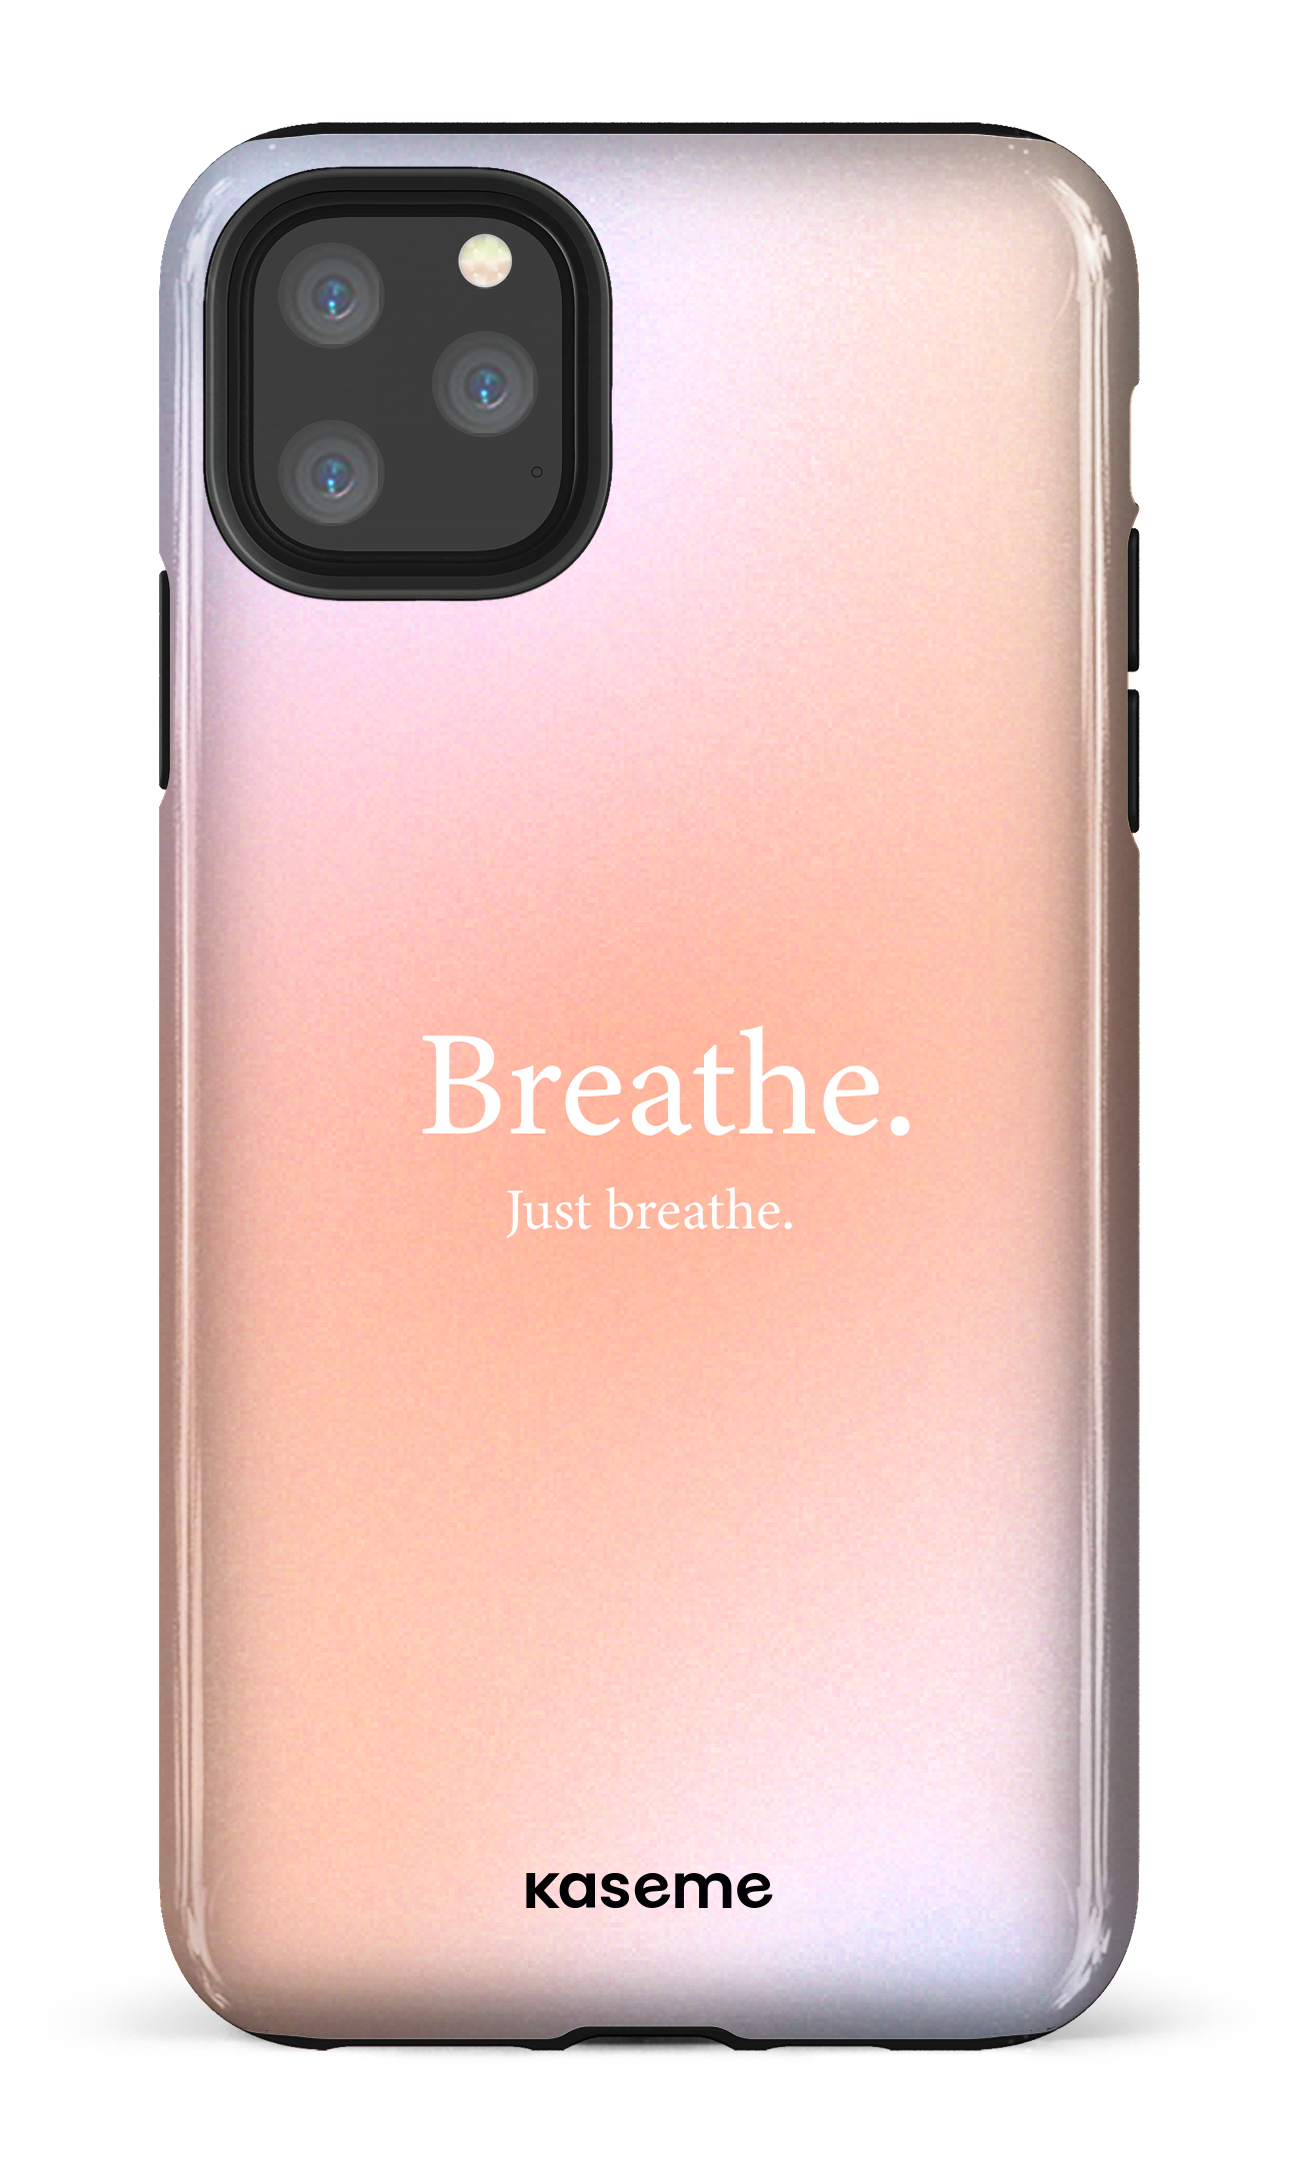 Just breathe - iPhone 11 Pro Max